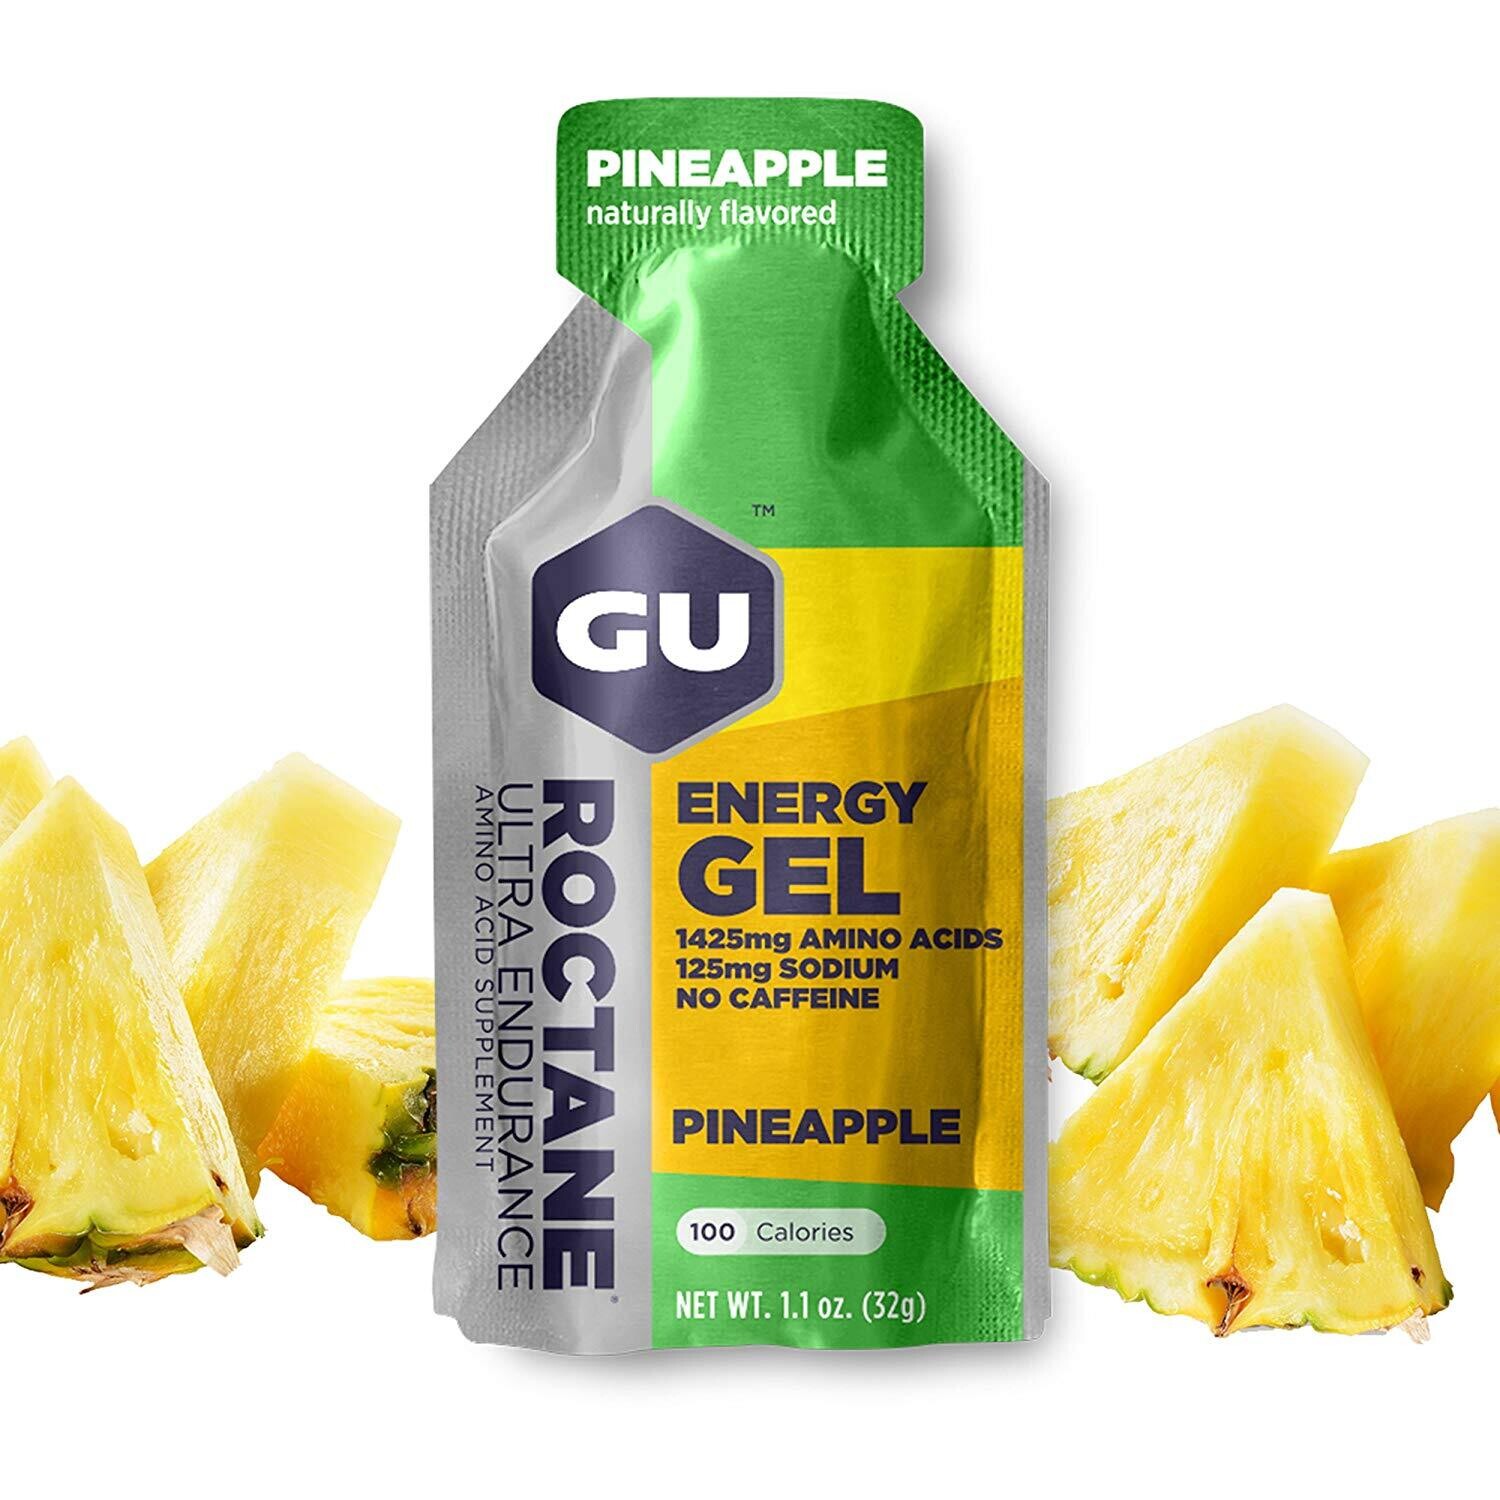 GU Roctane Energy Gel - Pineapple, Caffeine Free